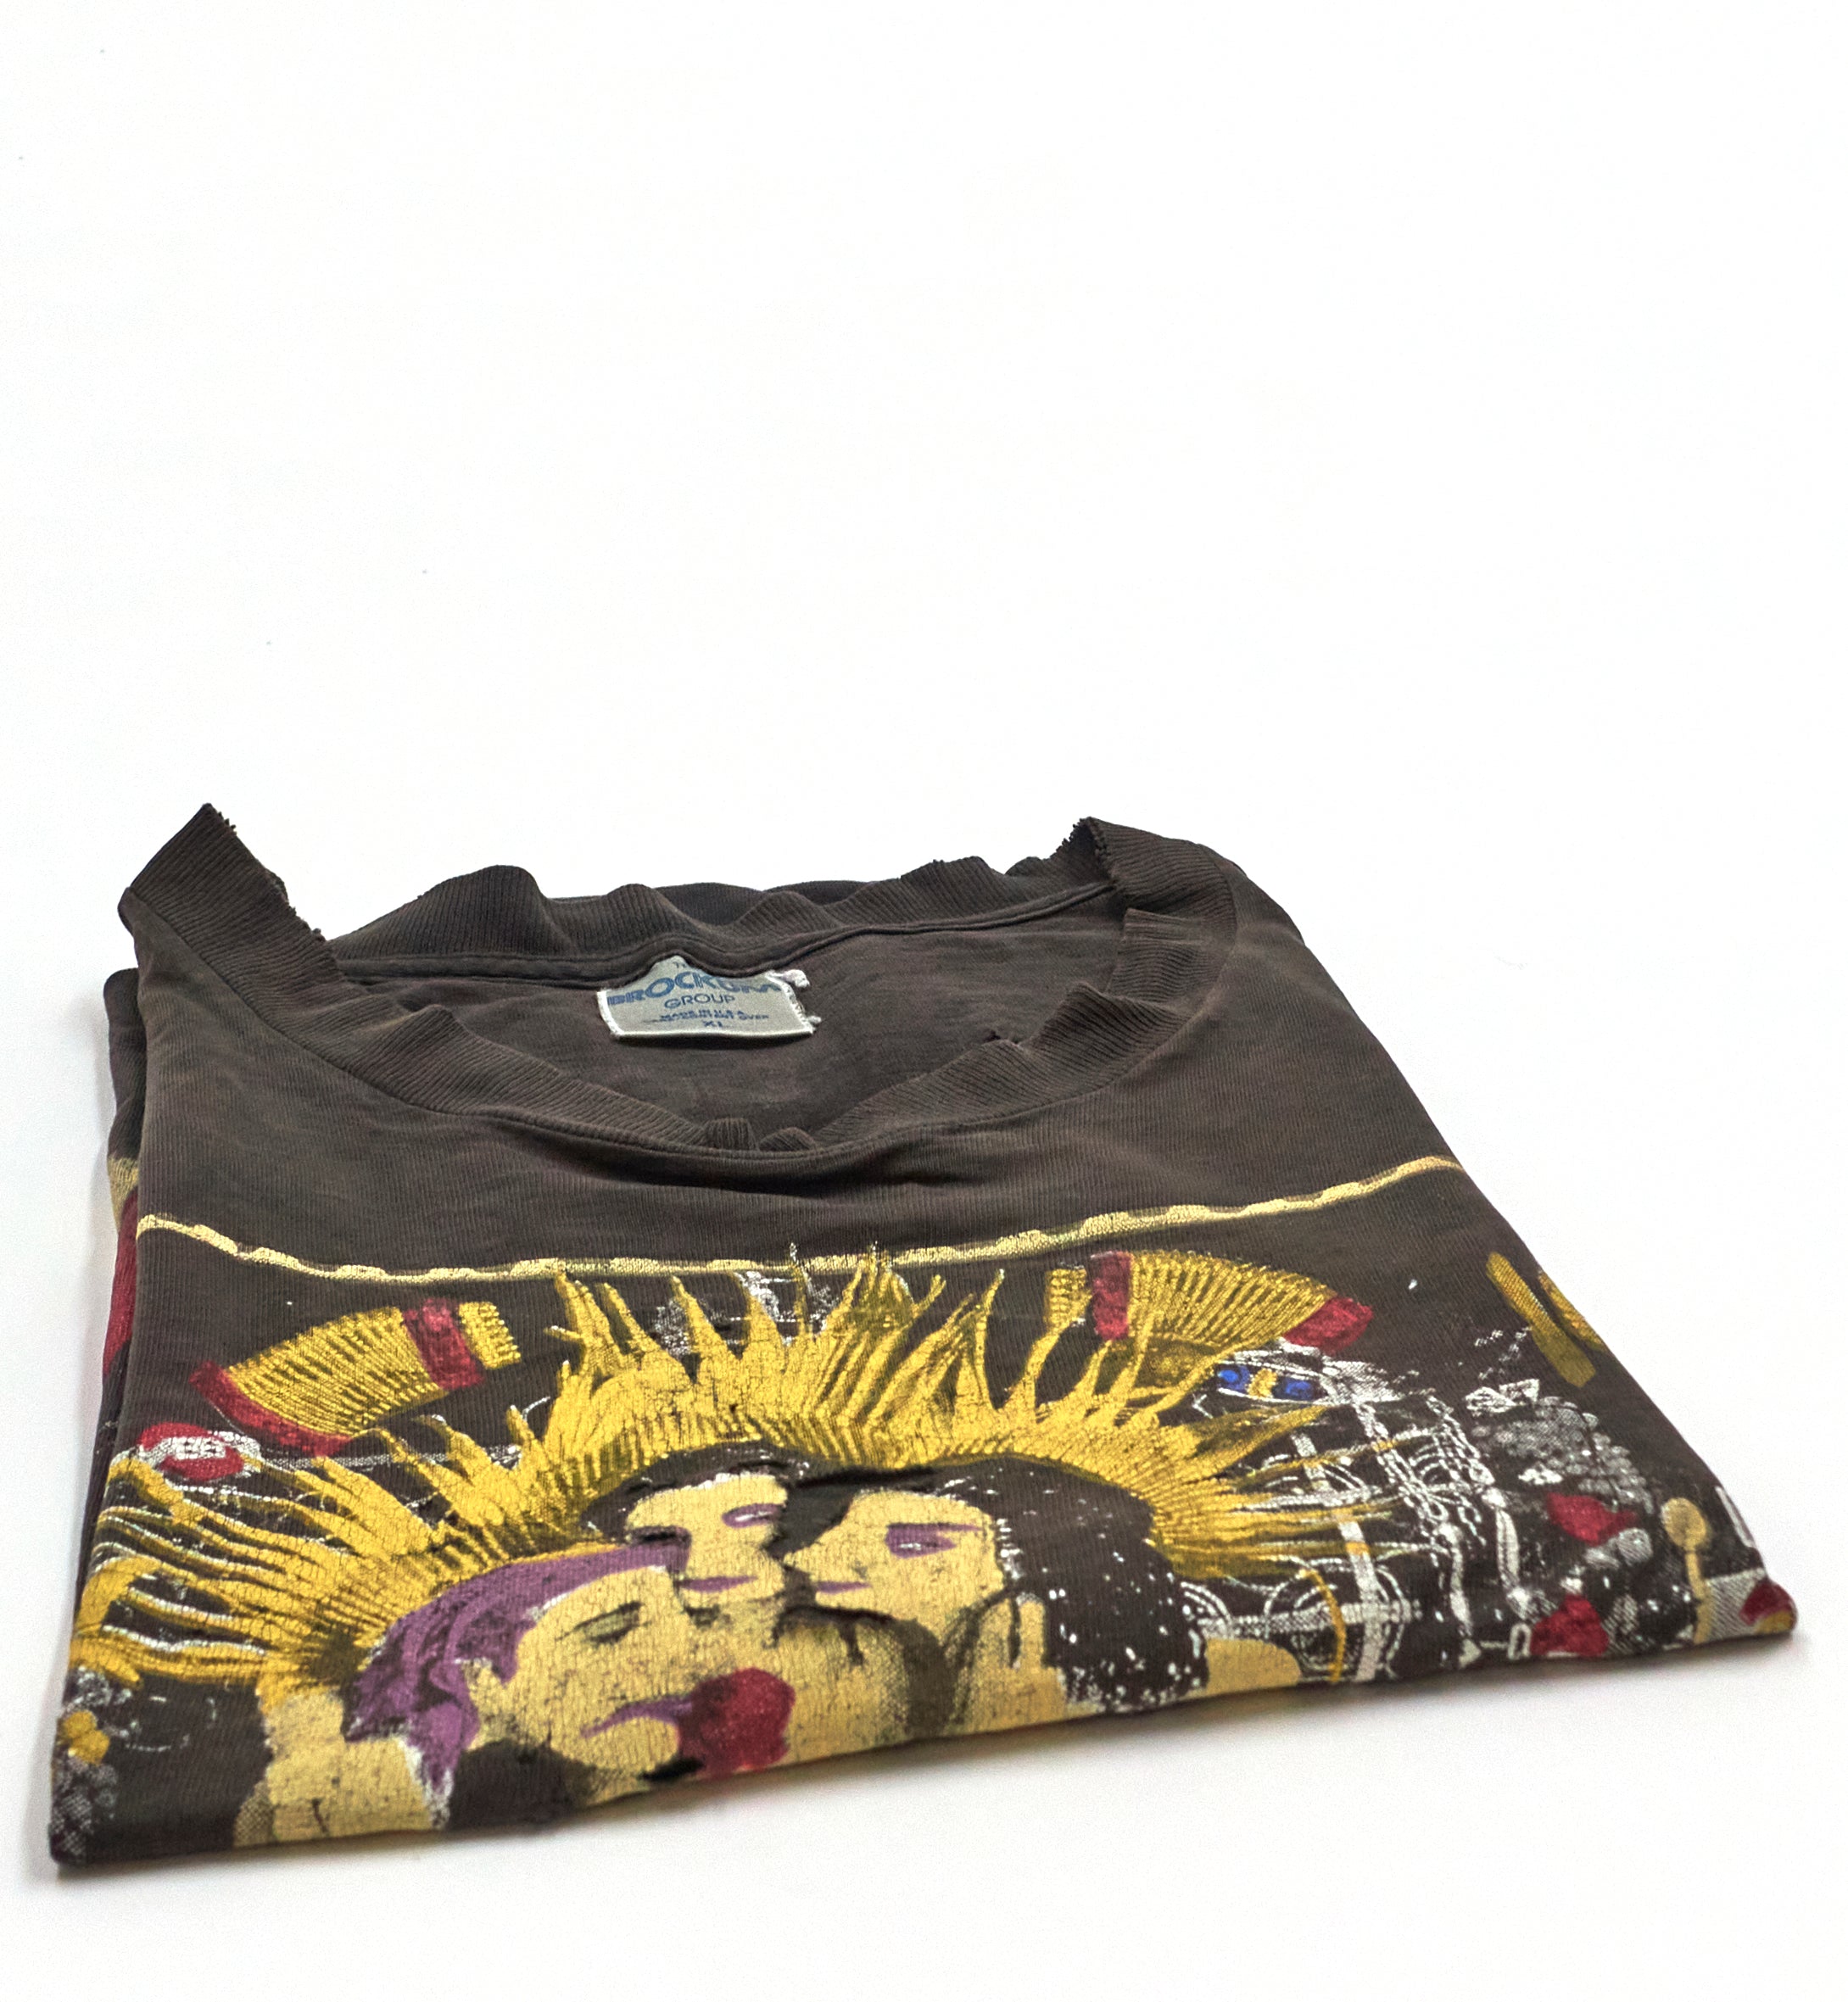 Jane's Addiction - Ritual De Lo Habitual 1990 Tour Shirt Size XL